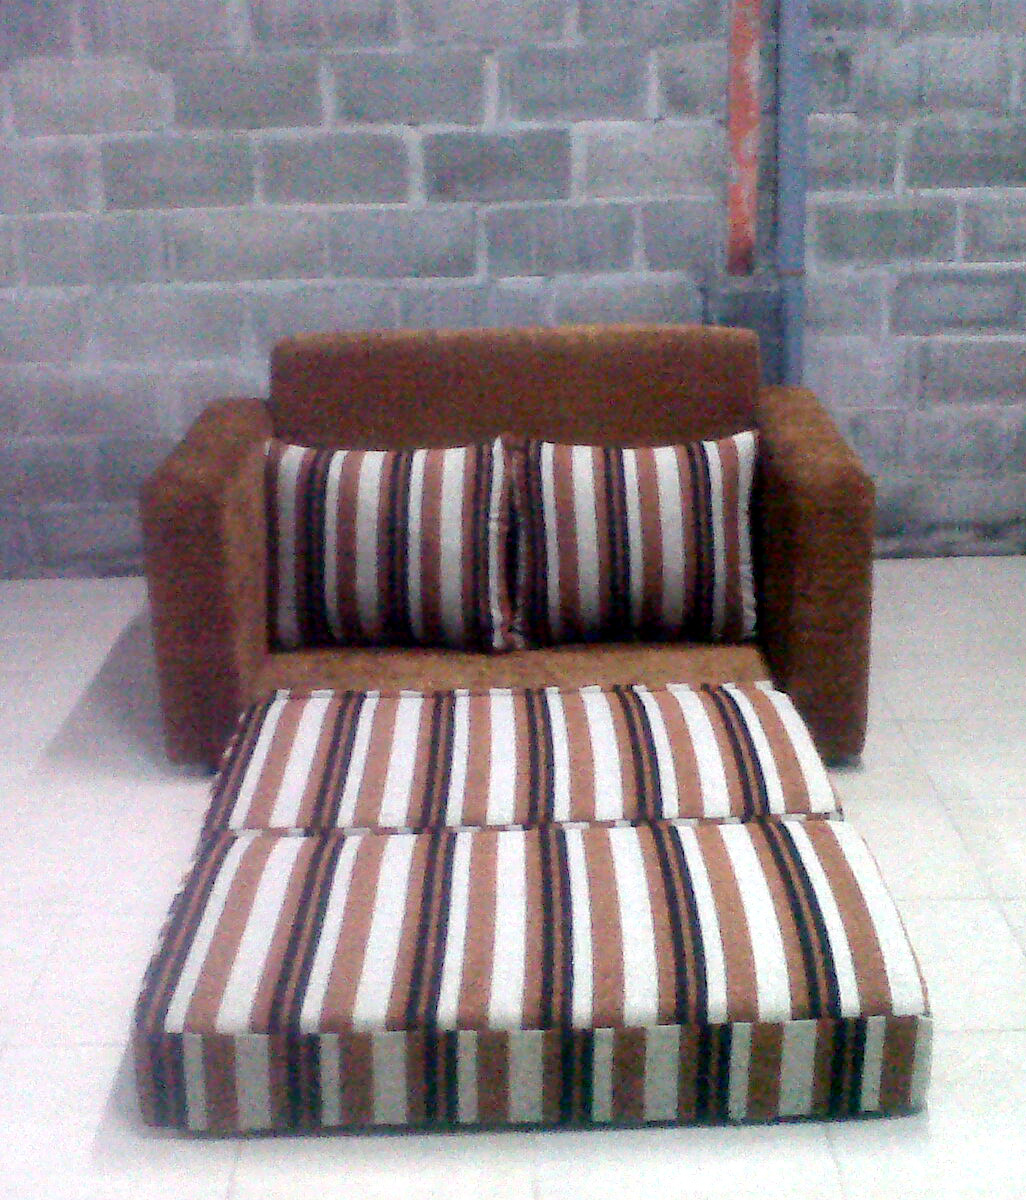 Harga Sofa Bed Surabaya Thecreativescientistcom